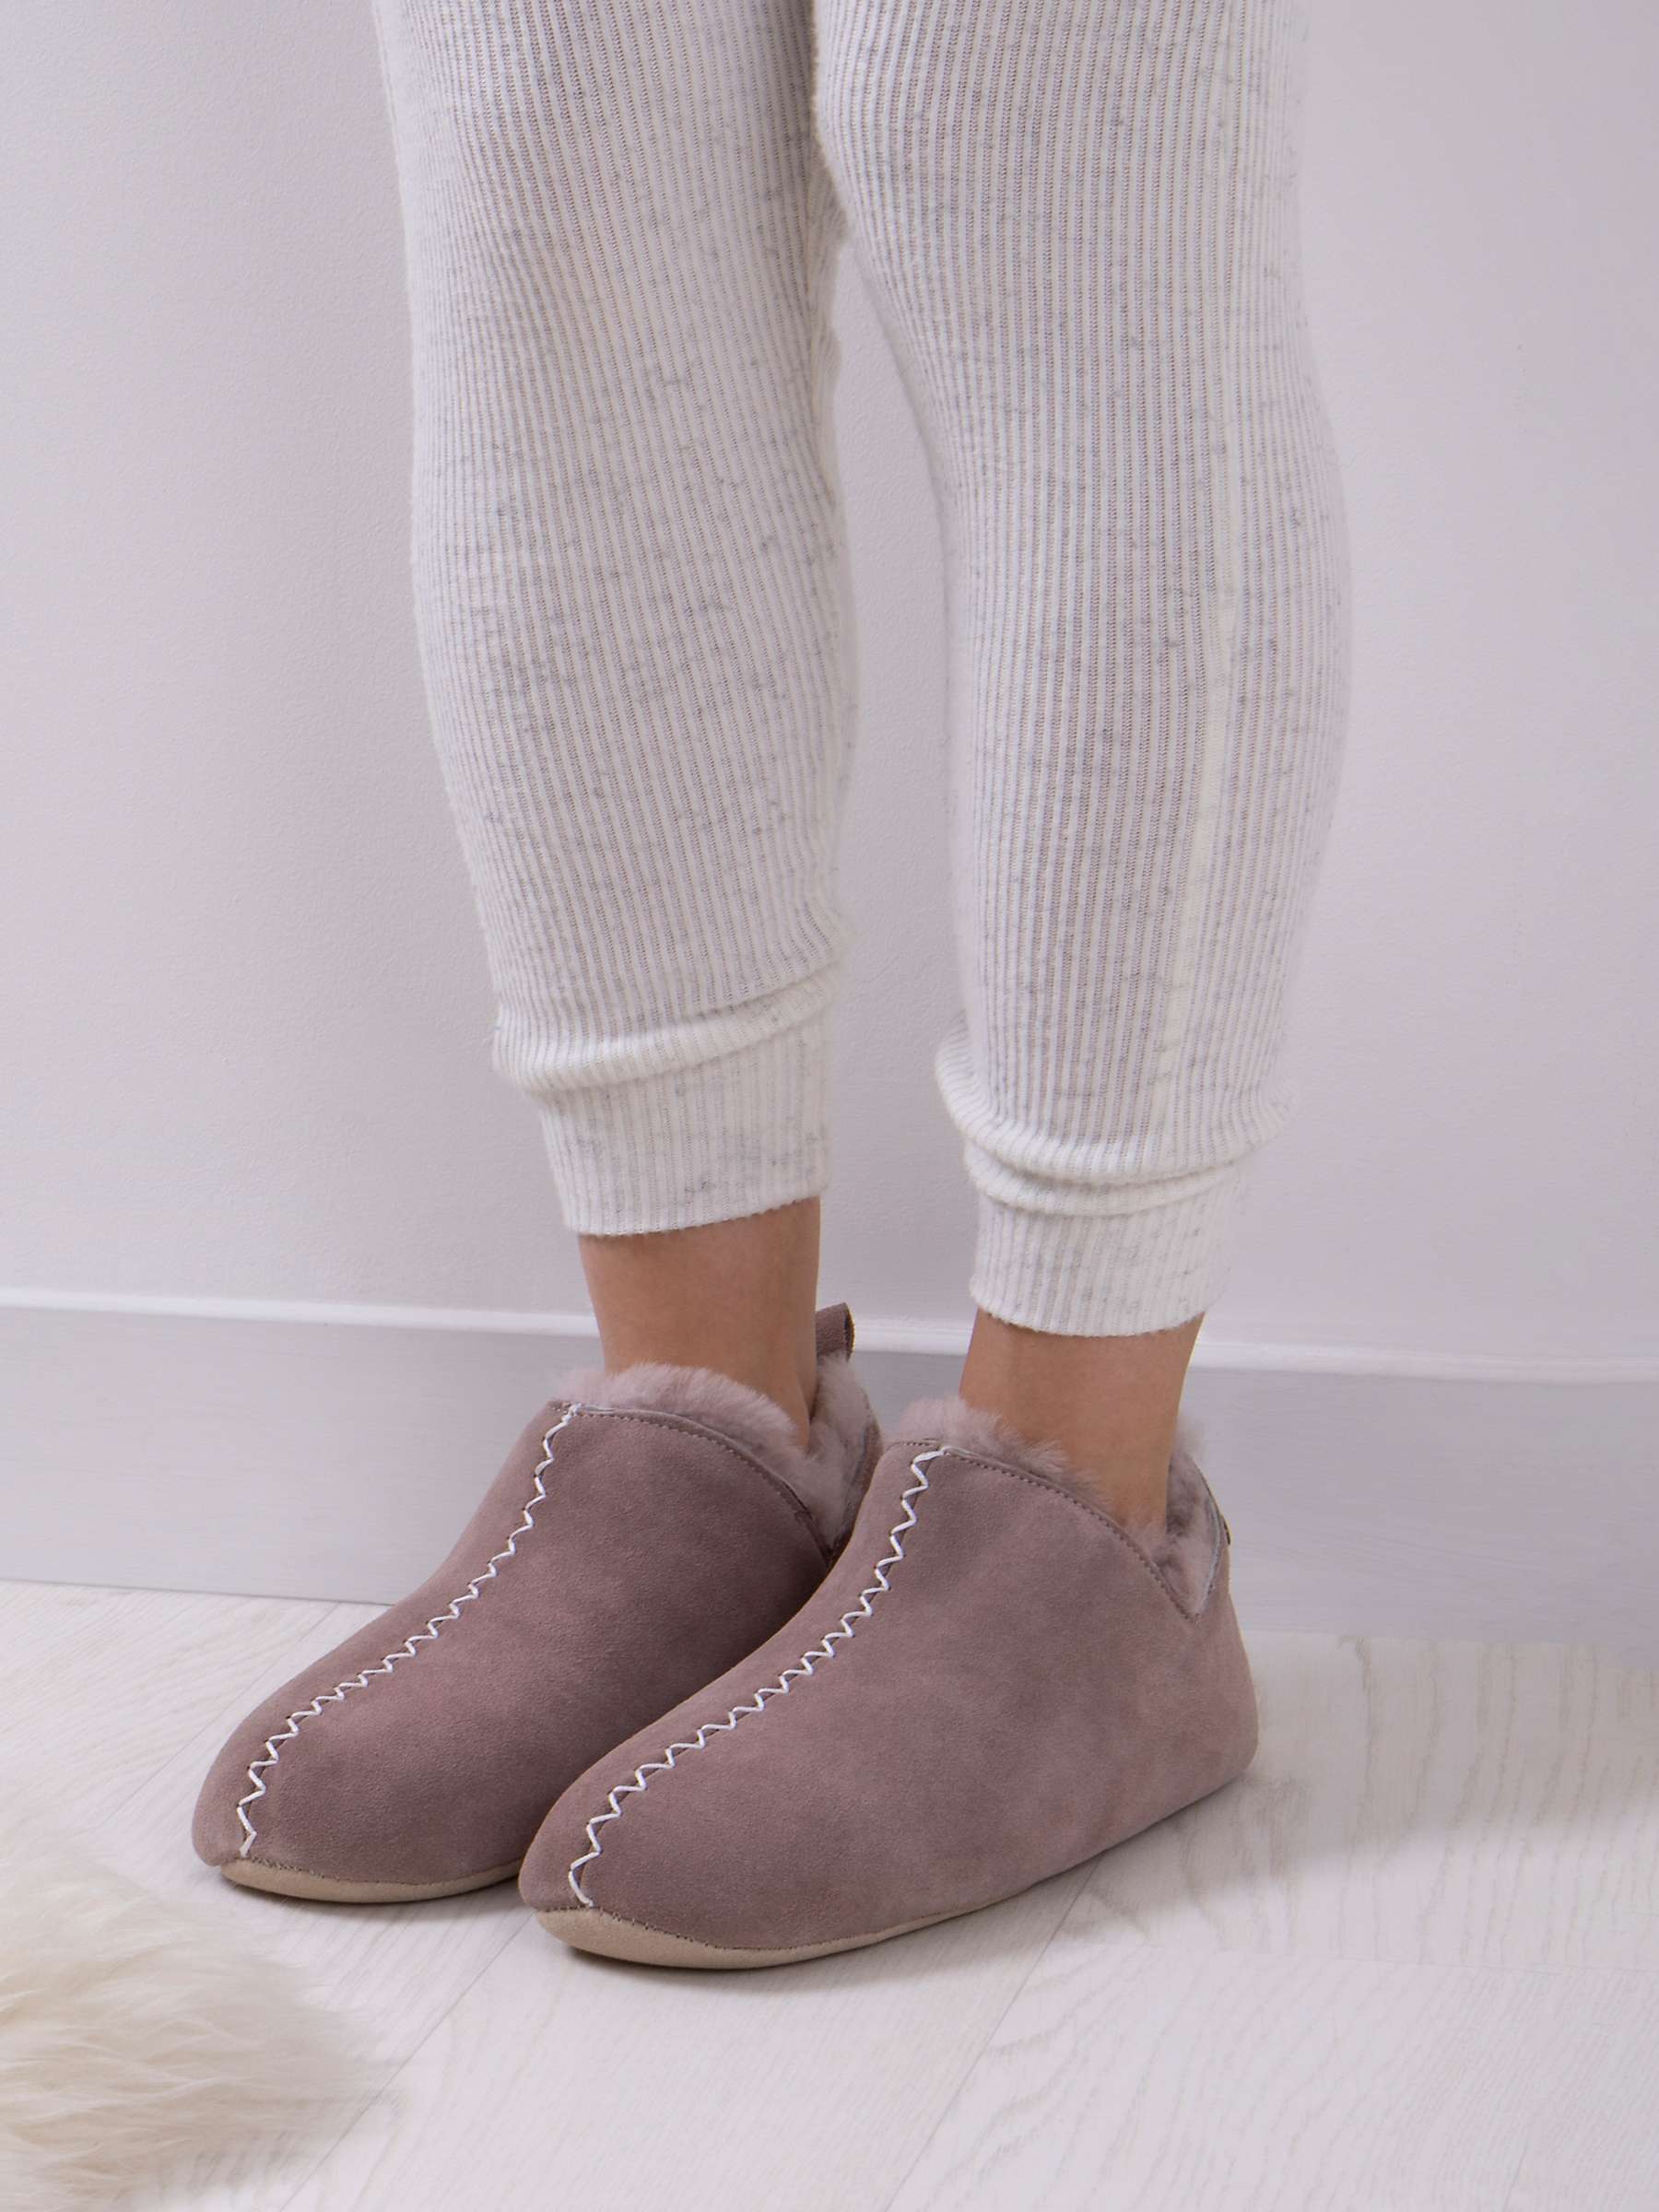 Buy Just Sheepskin Zara Pixie Boot Slippers, Mink Online at johnlewis.com